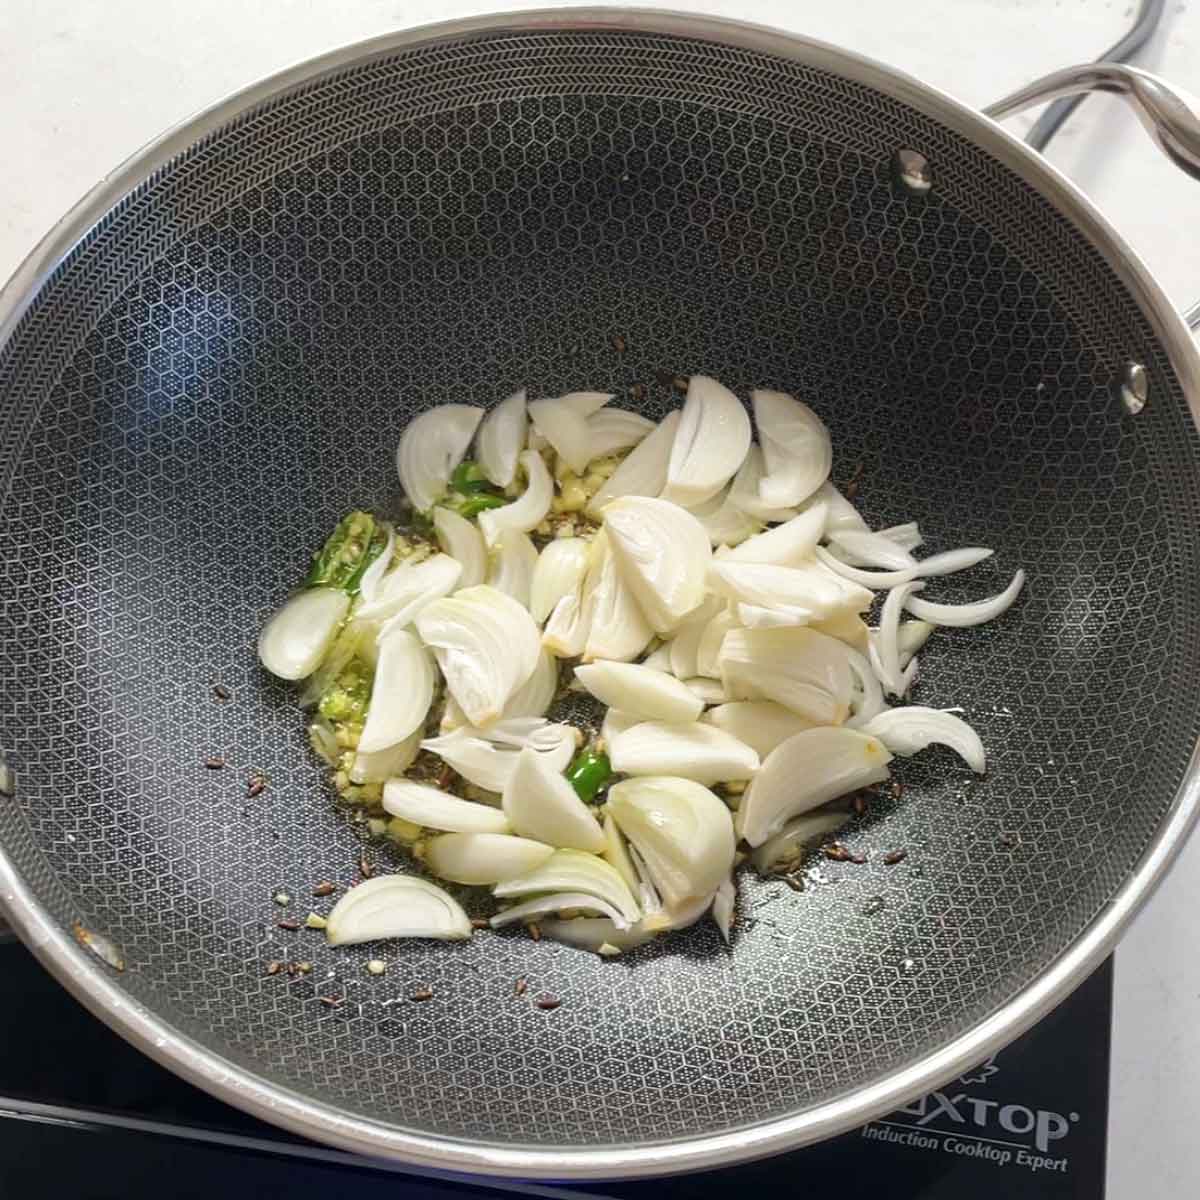 saute onion